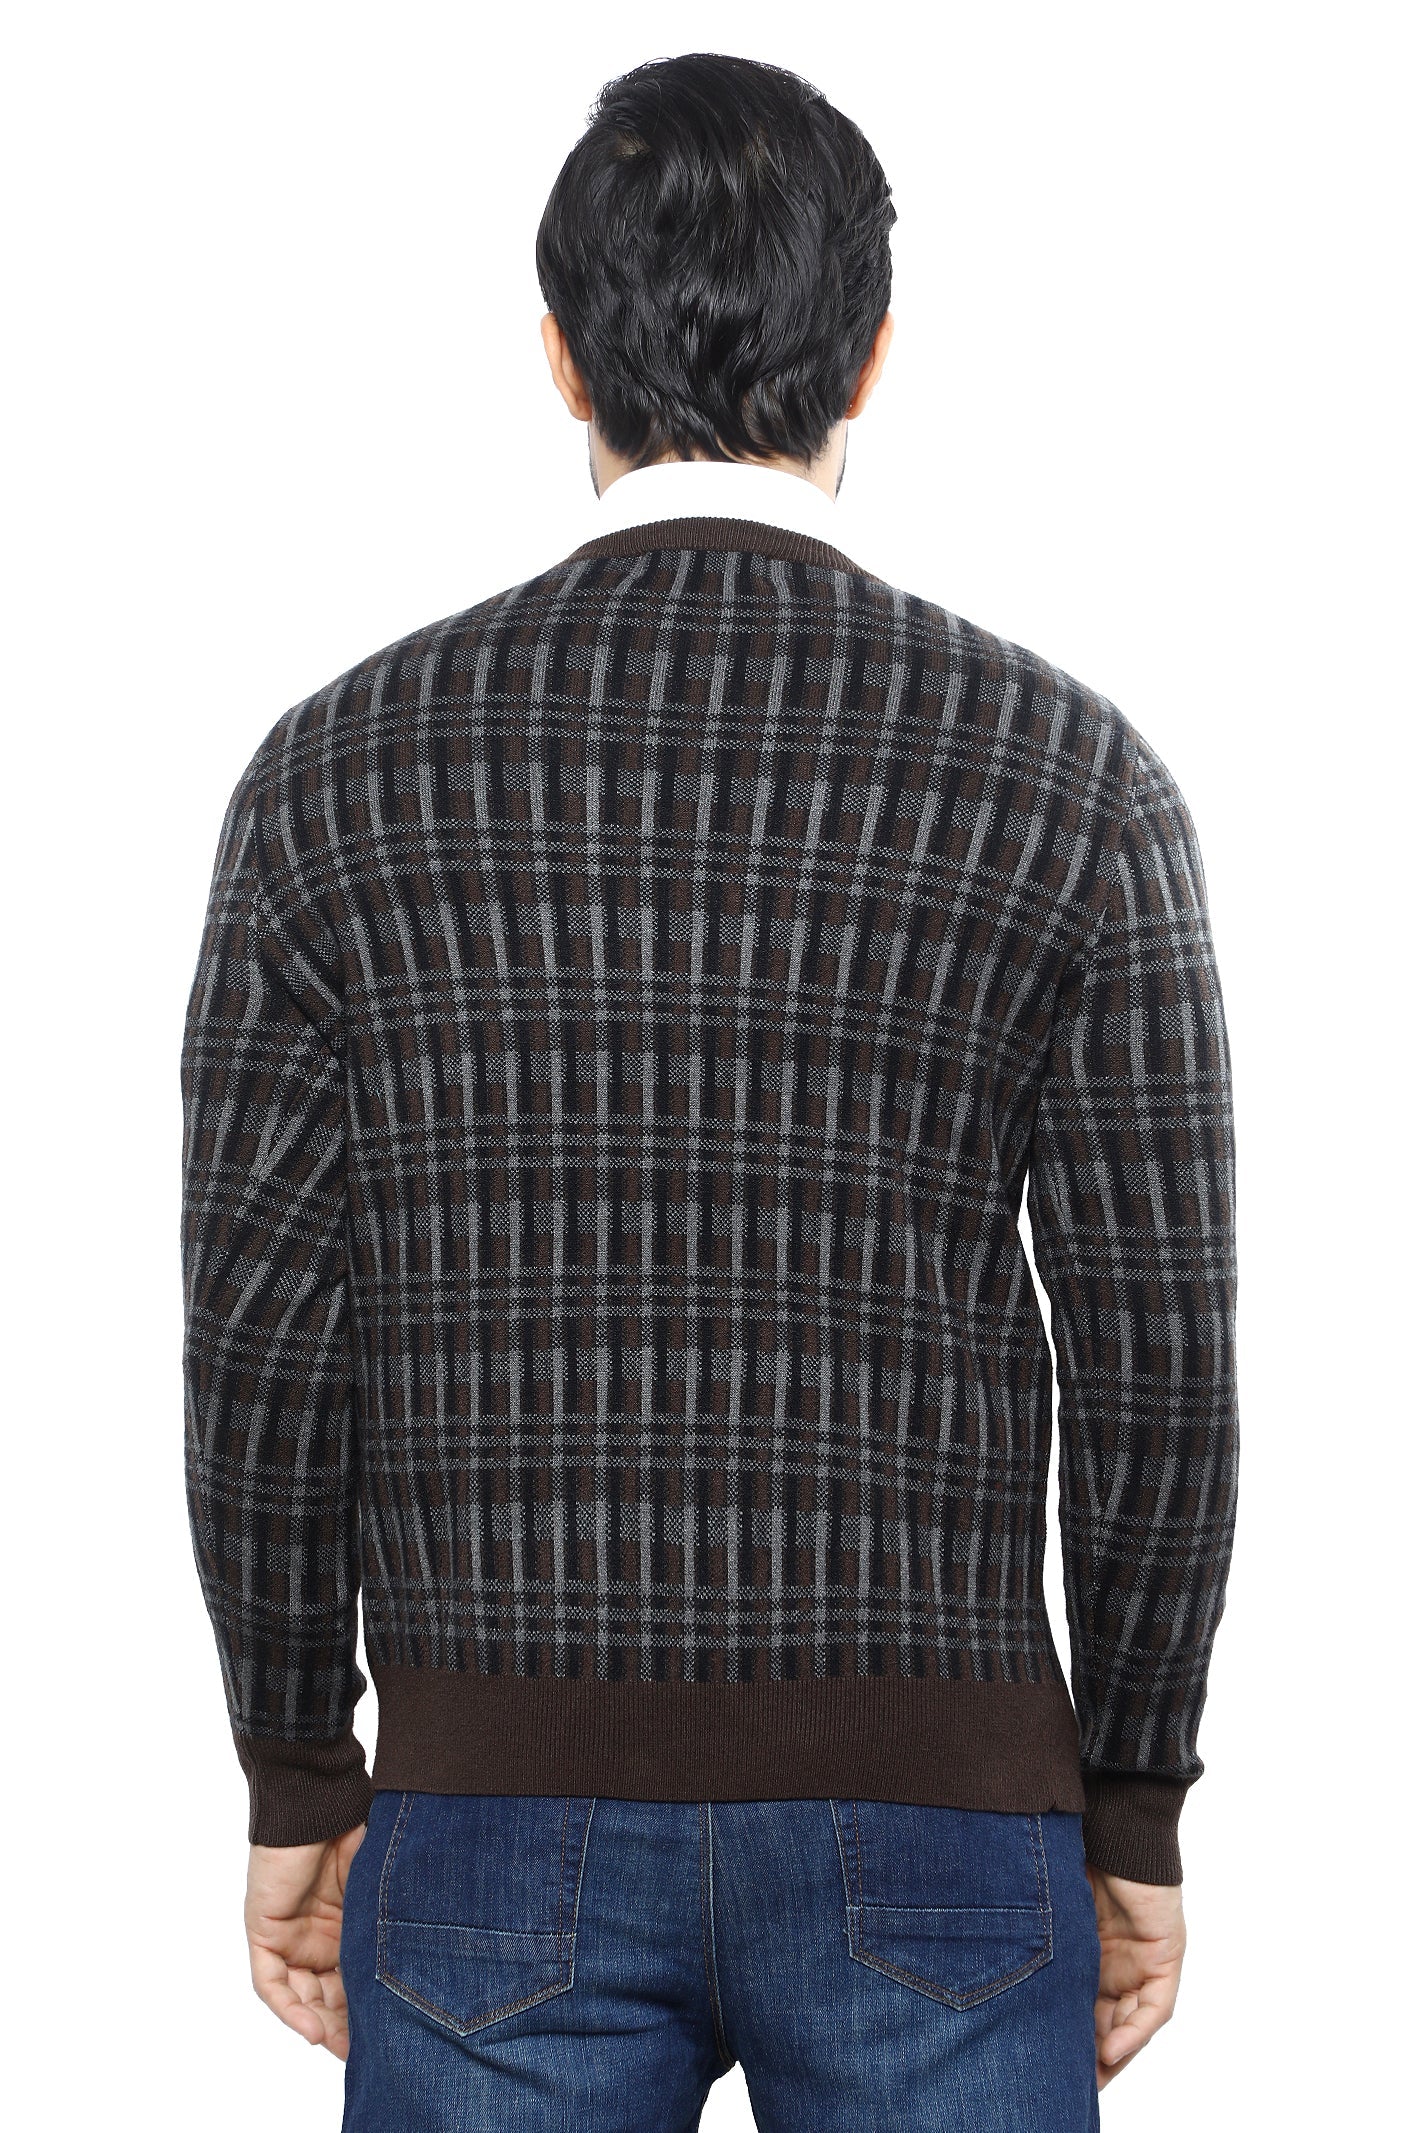 Gents Sweater SKU: SA599-BROWN - Diners